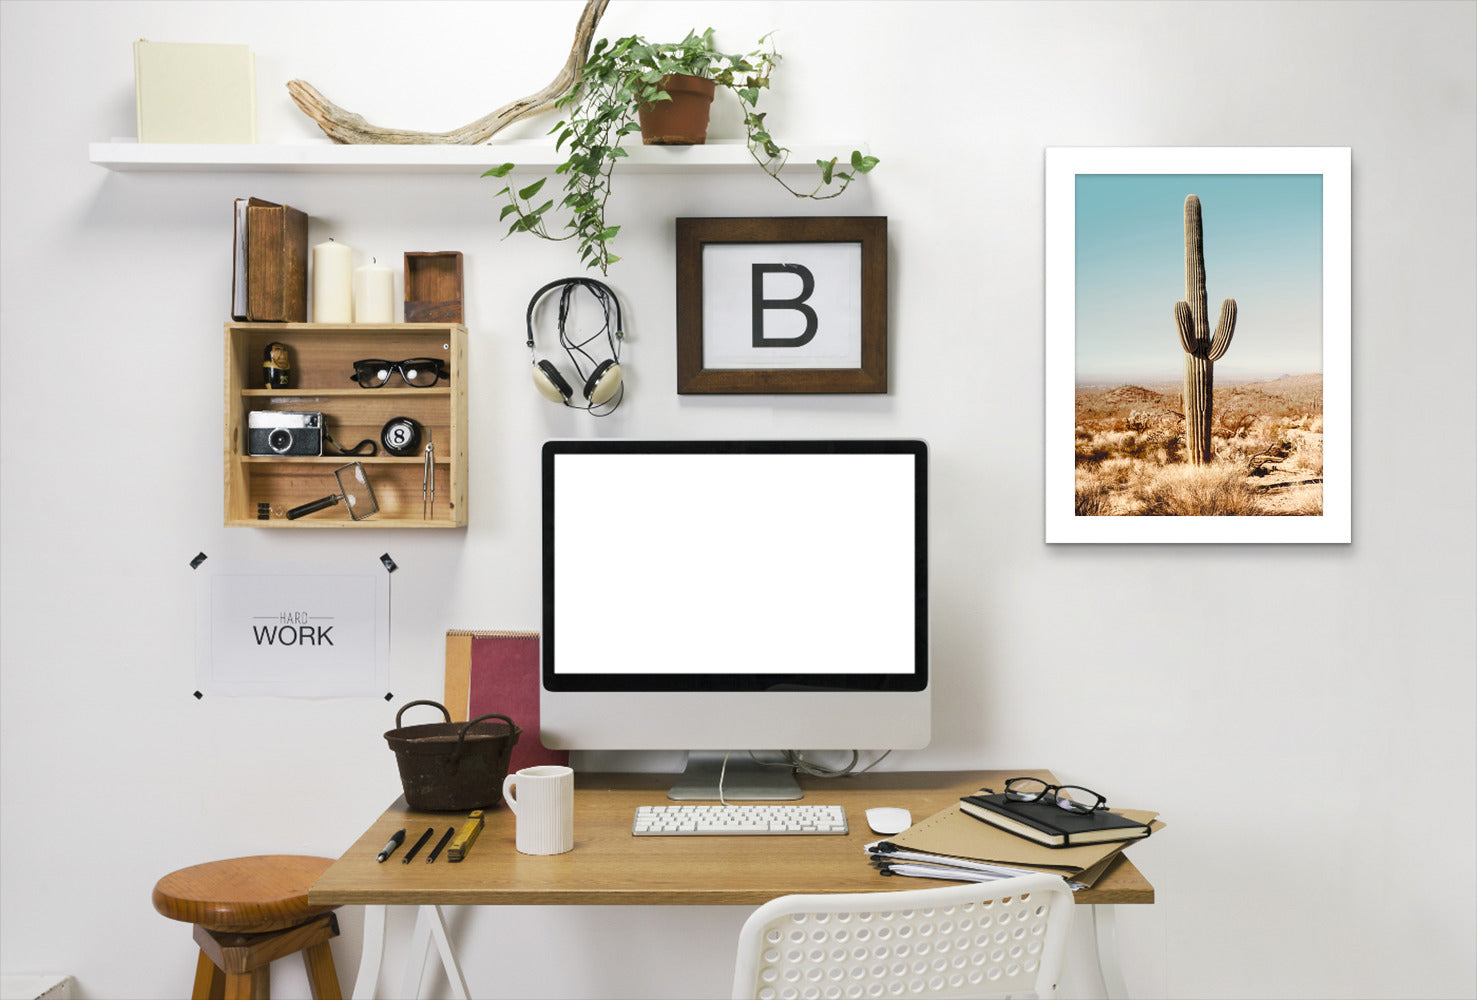 Desert Cactus Photo by Tanya Shumkina - White Framed Print - Wall Art - Americanflat